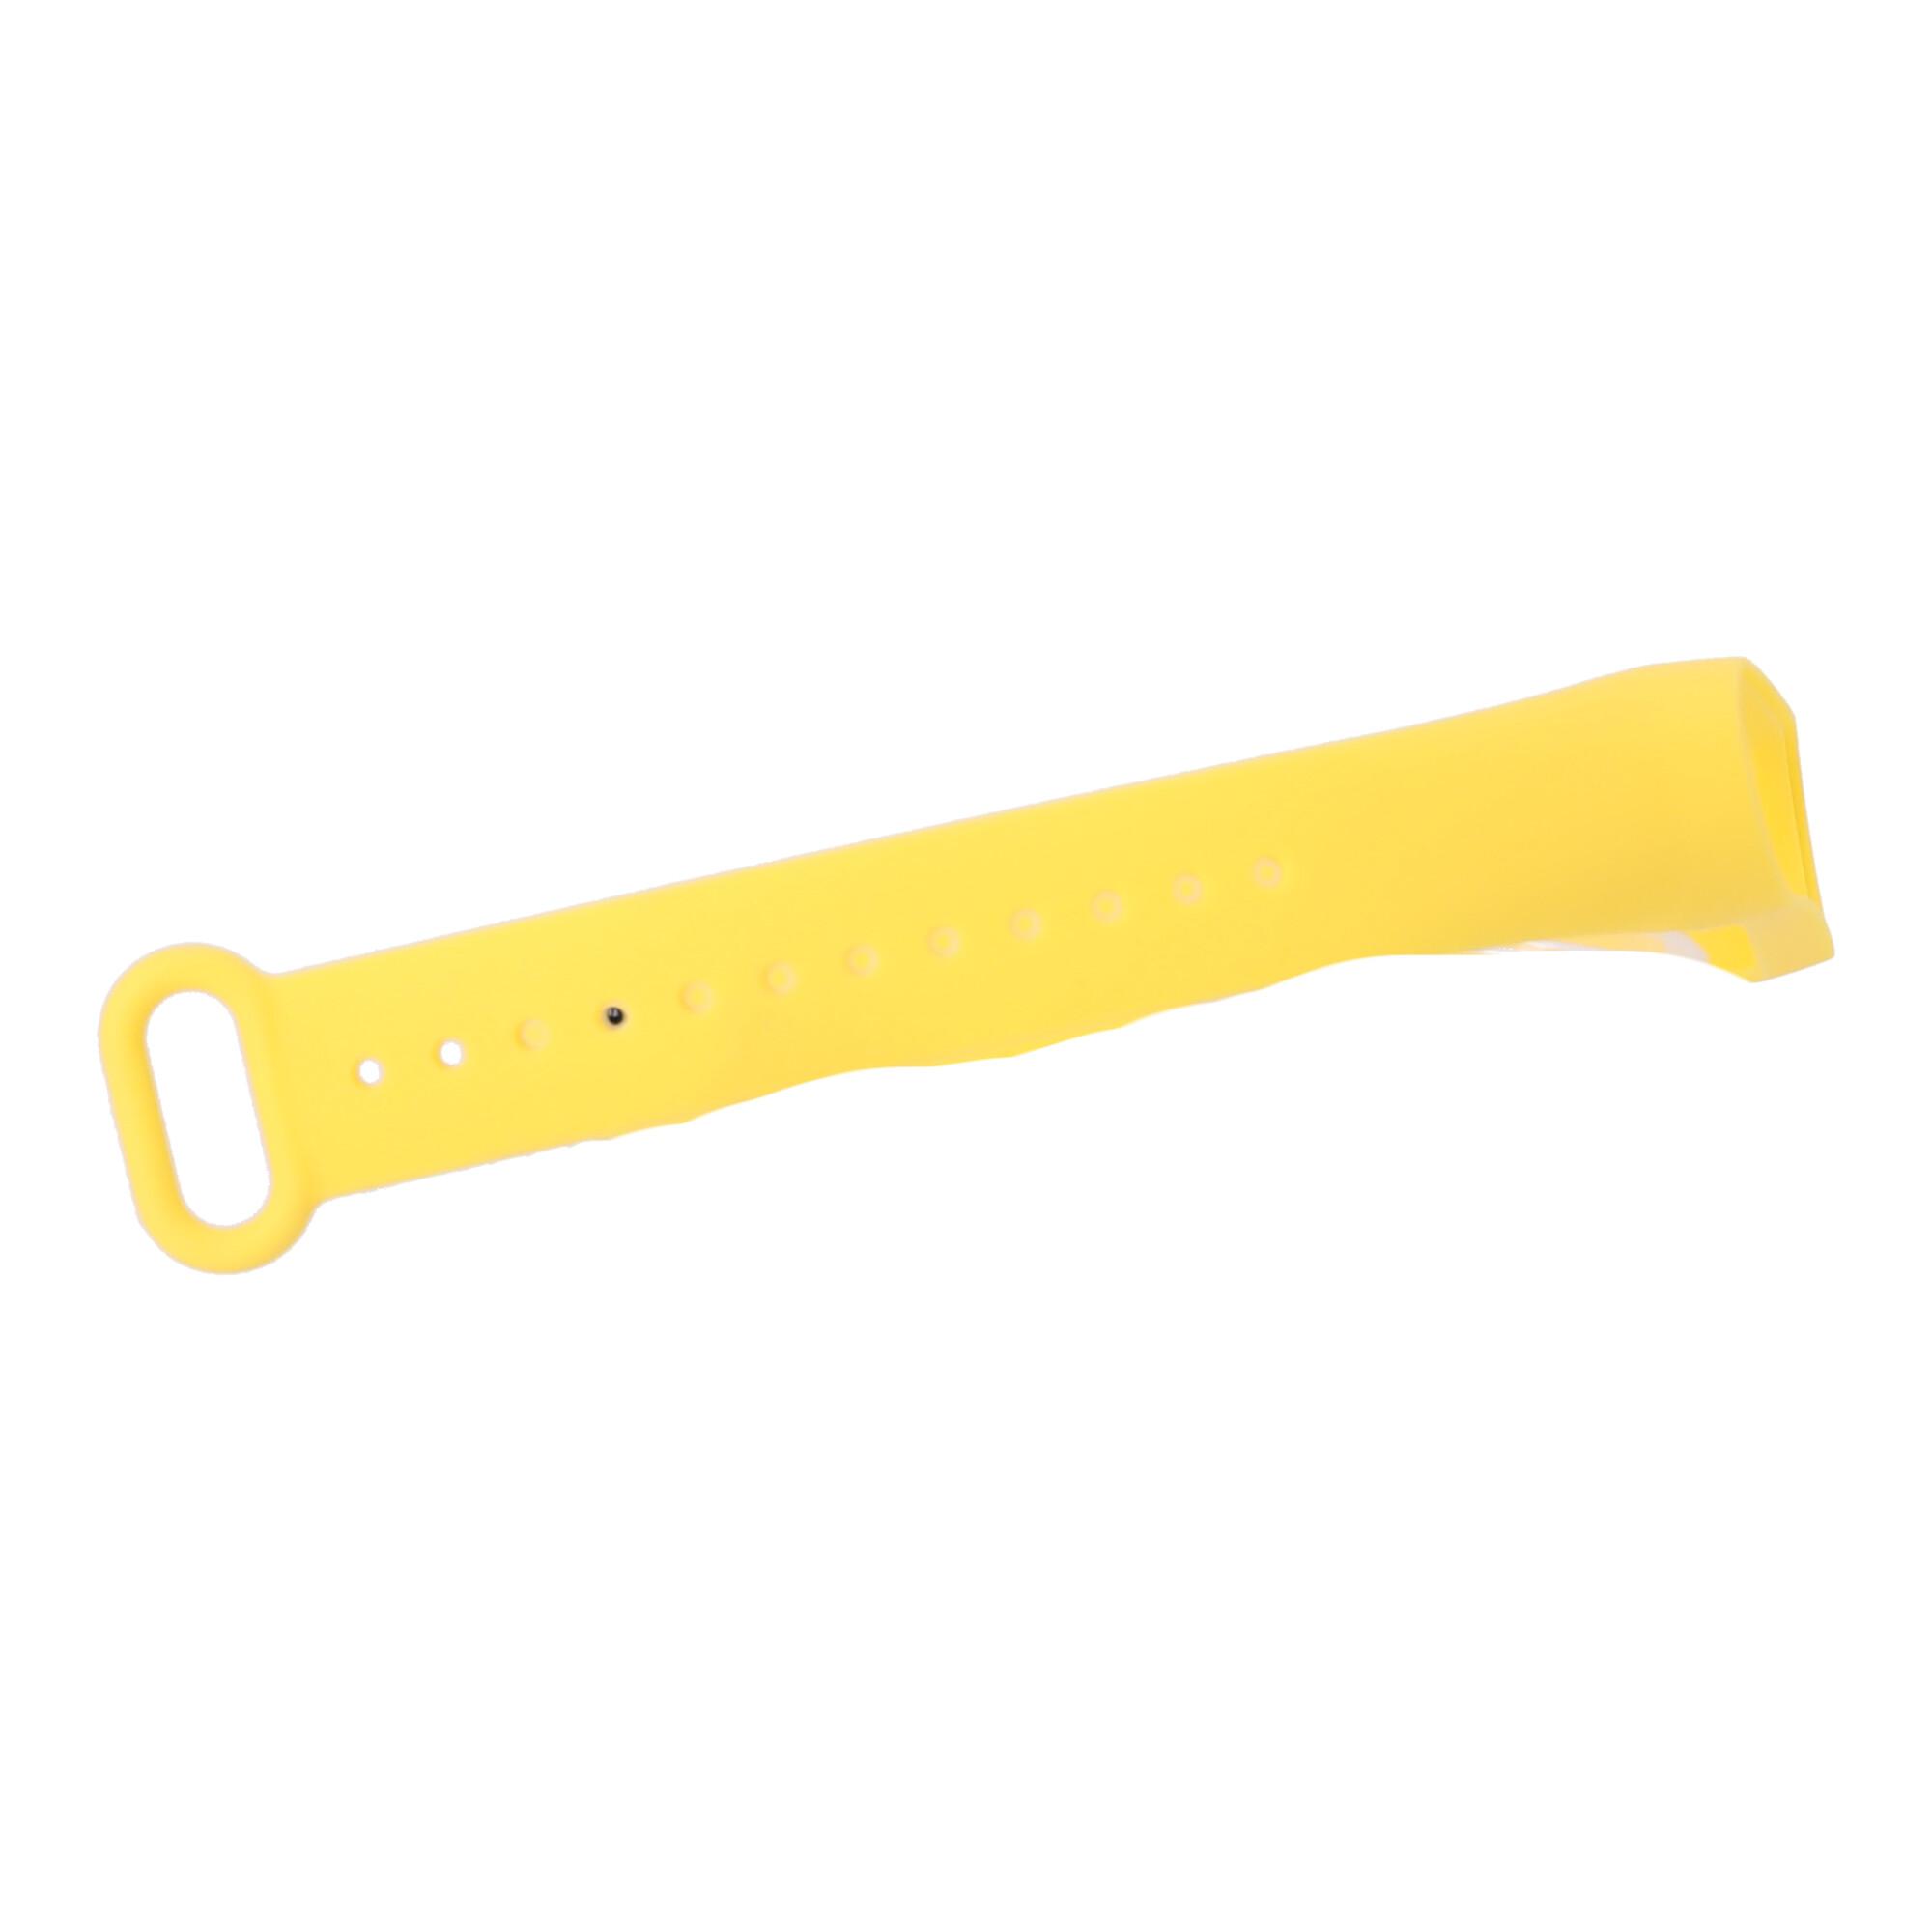 Silicone strap for Xiaomi Mi Band 3 / Xiaomi Mi Band 4 - yellow